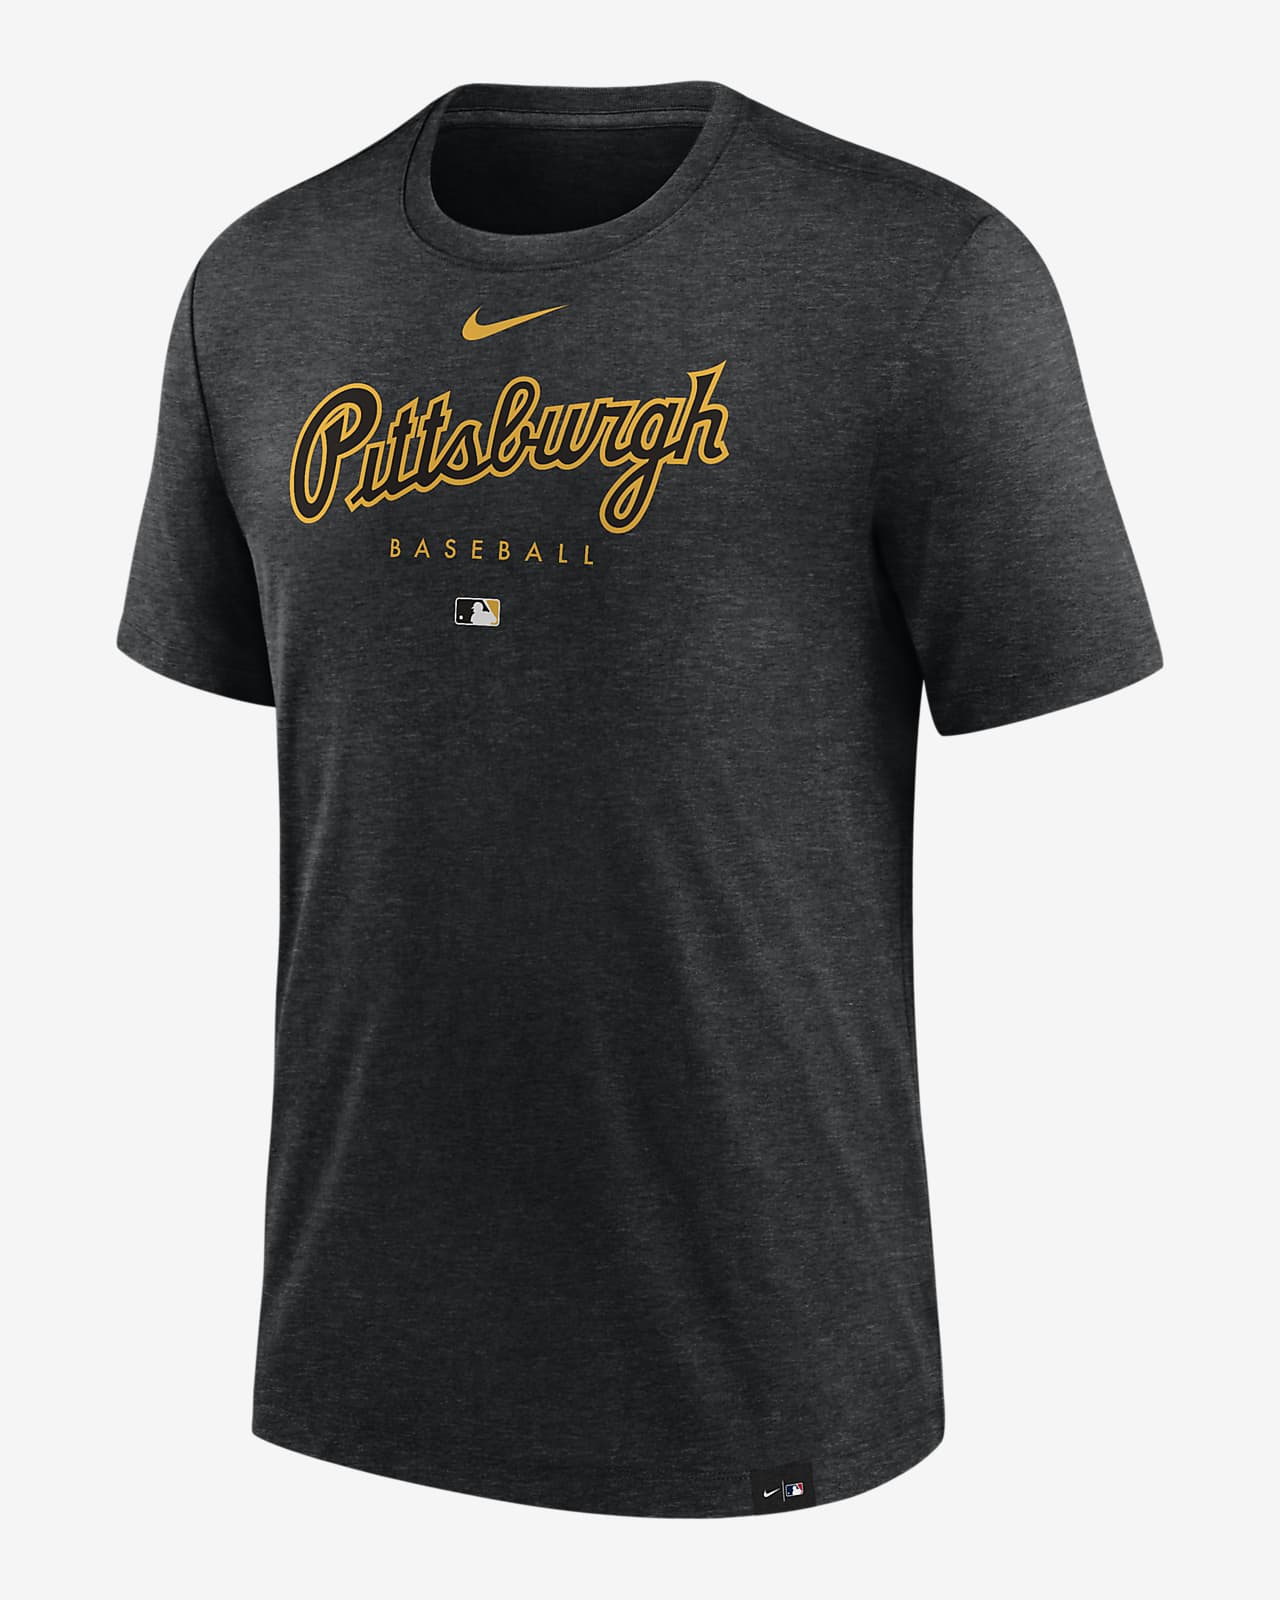 Men's Nike Heathered Gray Pittsburgh Pirates Team T-Shirt